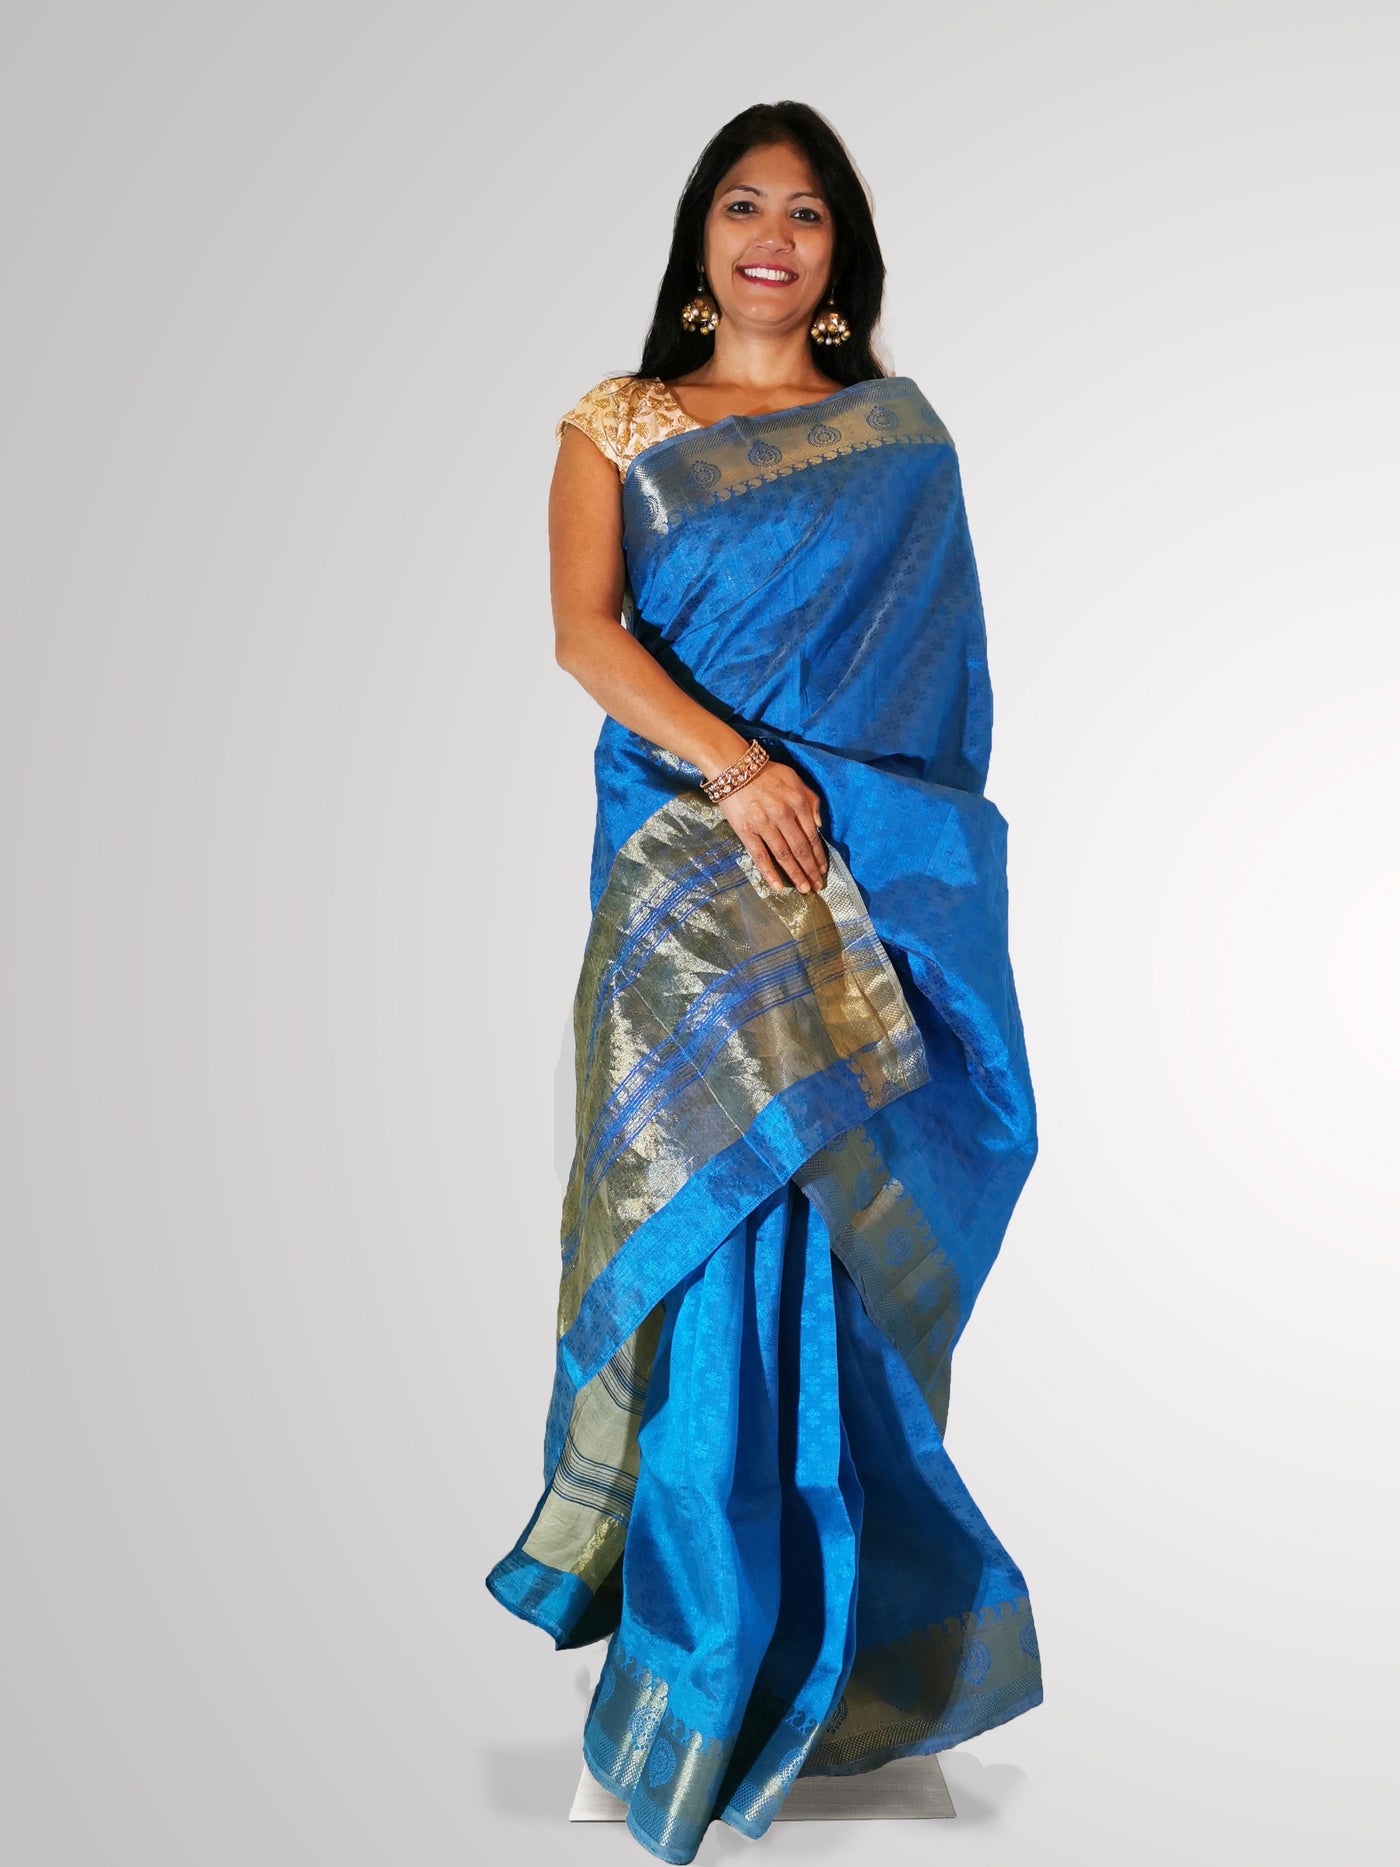 Blue Banarasi Silk Saree - Indian Clothing in Denver, CO, Aurora, CO, Boulder, CO, Fort Collins, CO, Colorado Springs, CO, Parker, CO, Highlands Ranch, CO, Cherry Creek, CO, Centennial, CO, and Longmont, CO. Nationwide shipping USA - India Fashion X